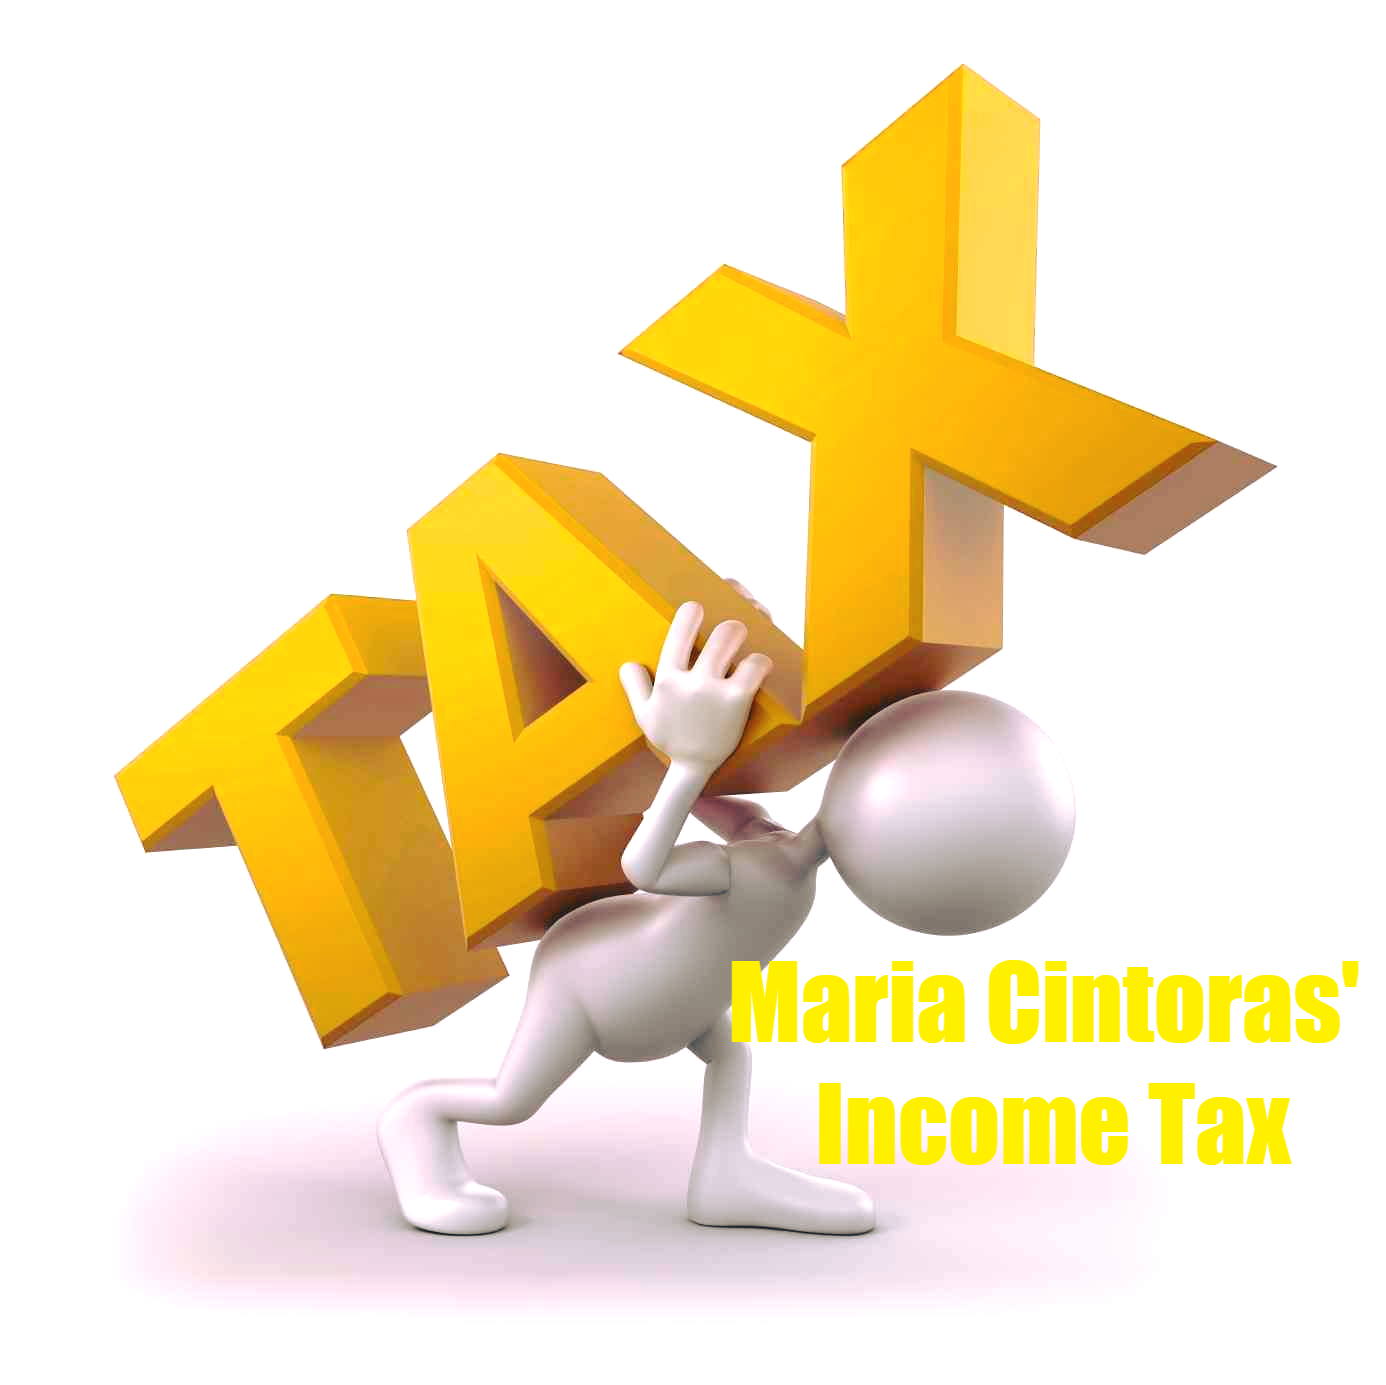 Maria Cintora Income Tax